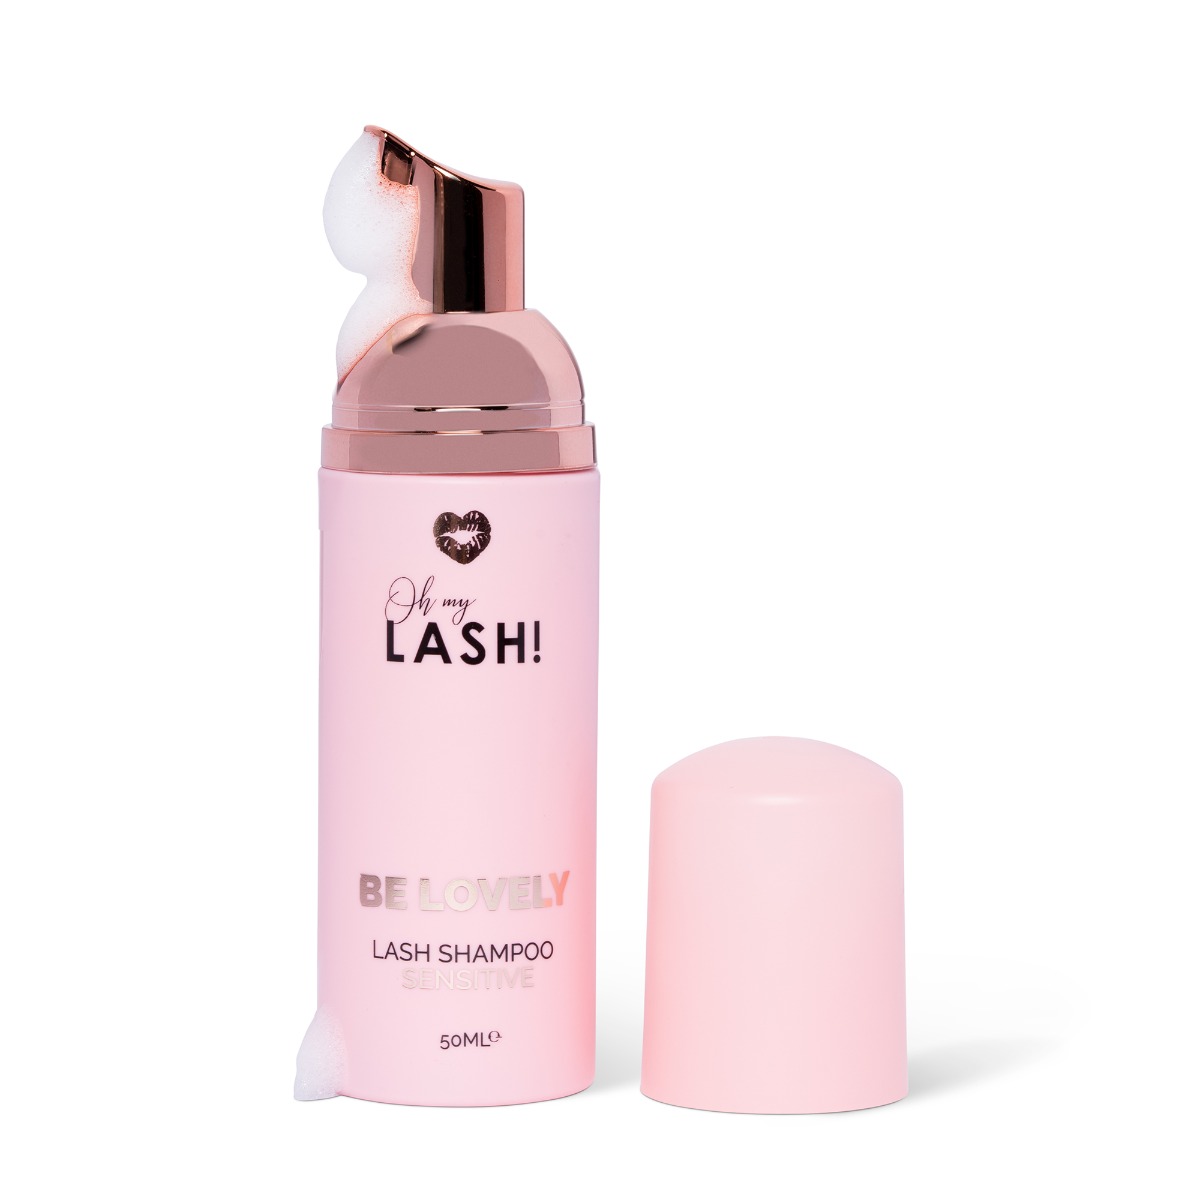 Oh My Lash - Be Lovely  Lash Shampoo Sensitive 50ml